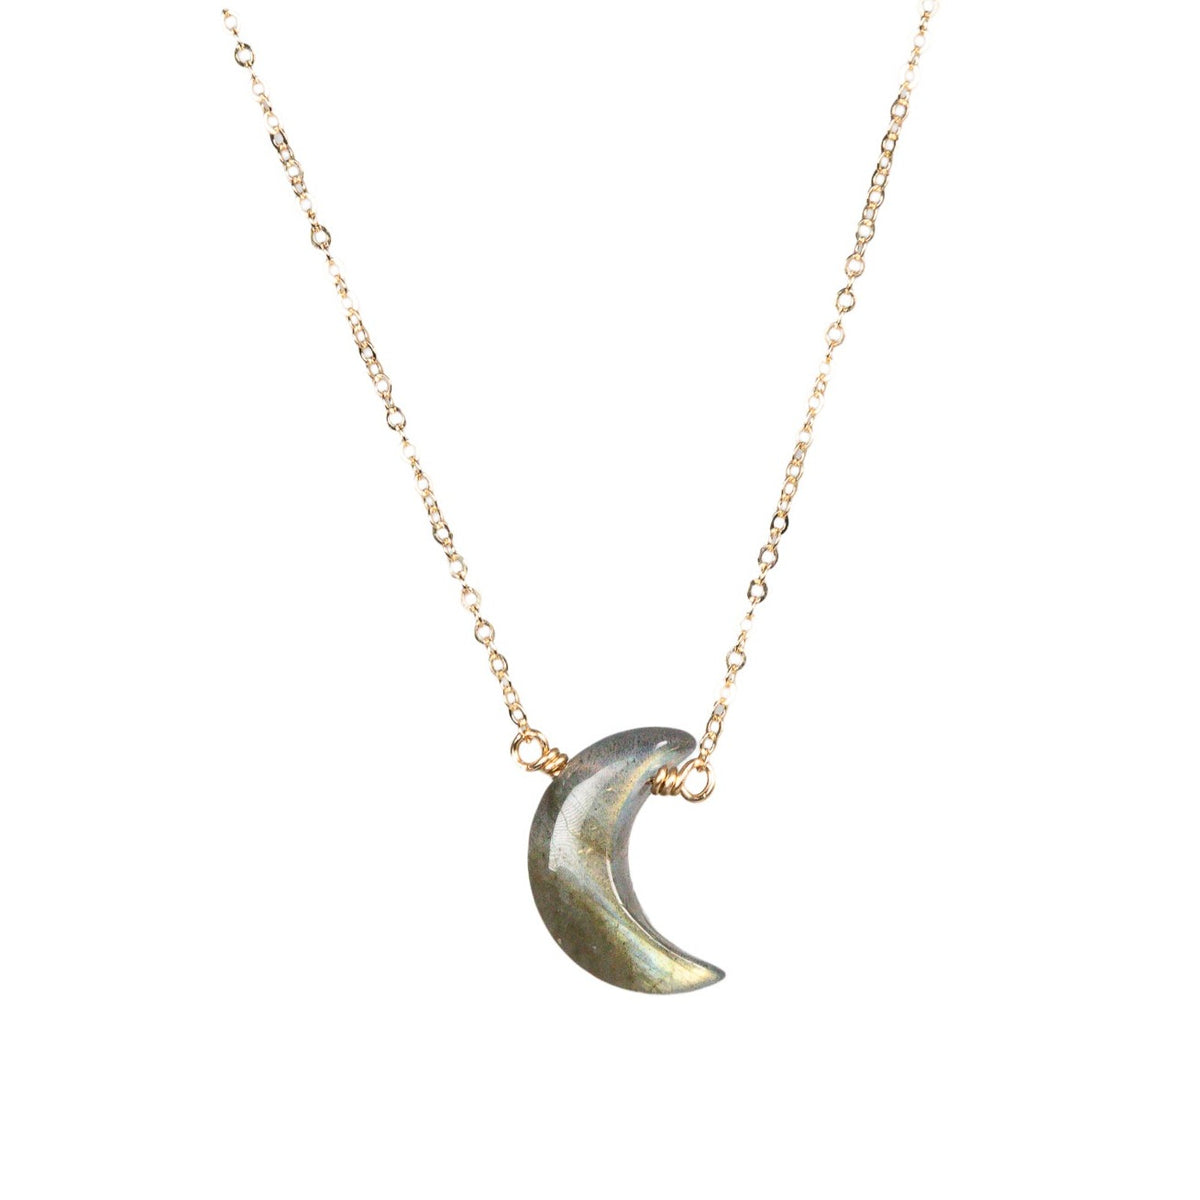 Labradorite Moon pendant - 14K gold filled